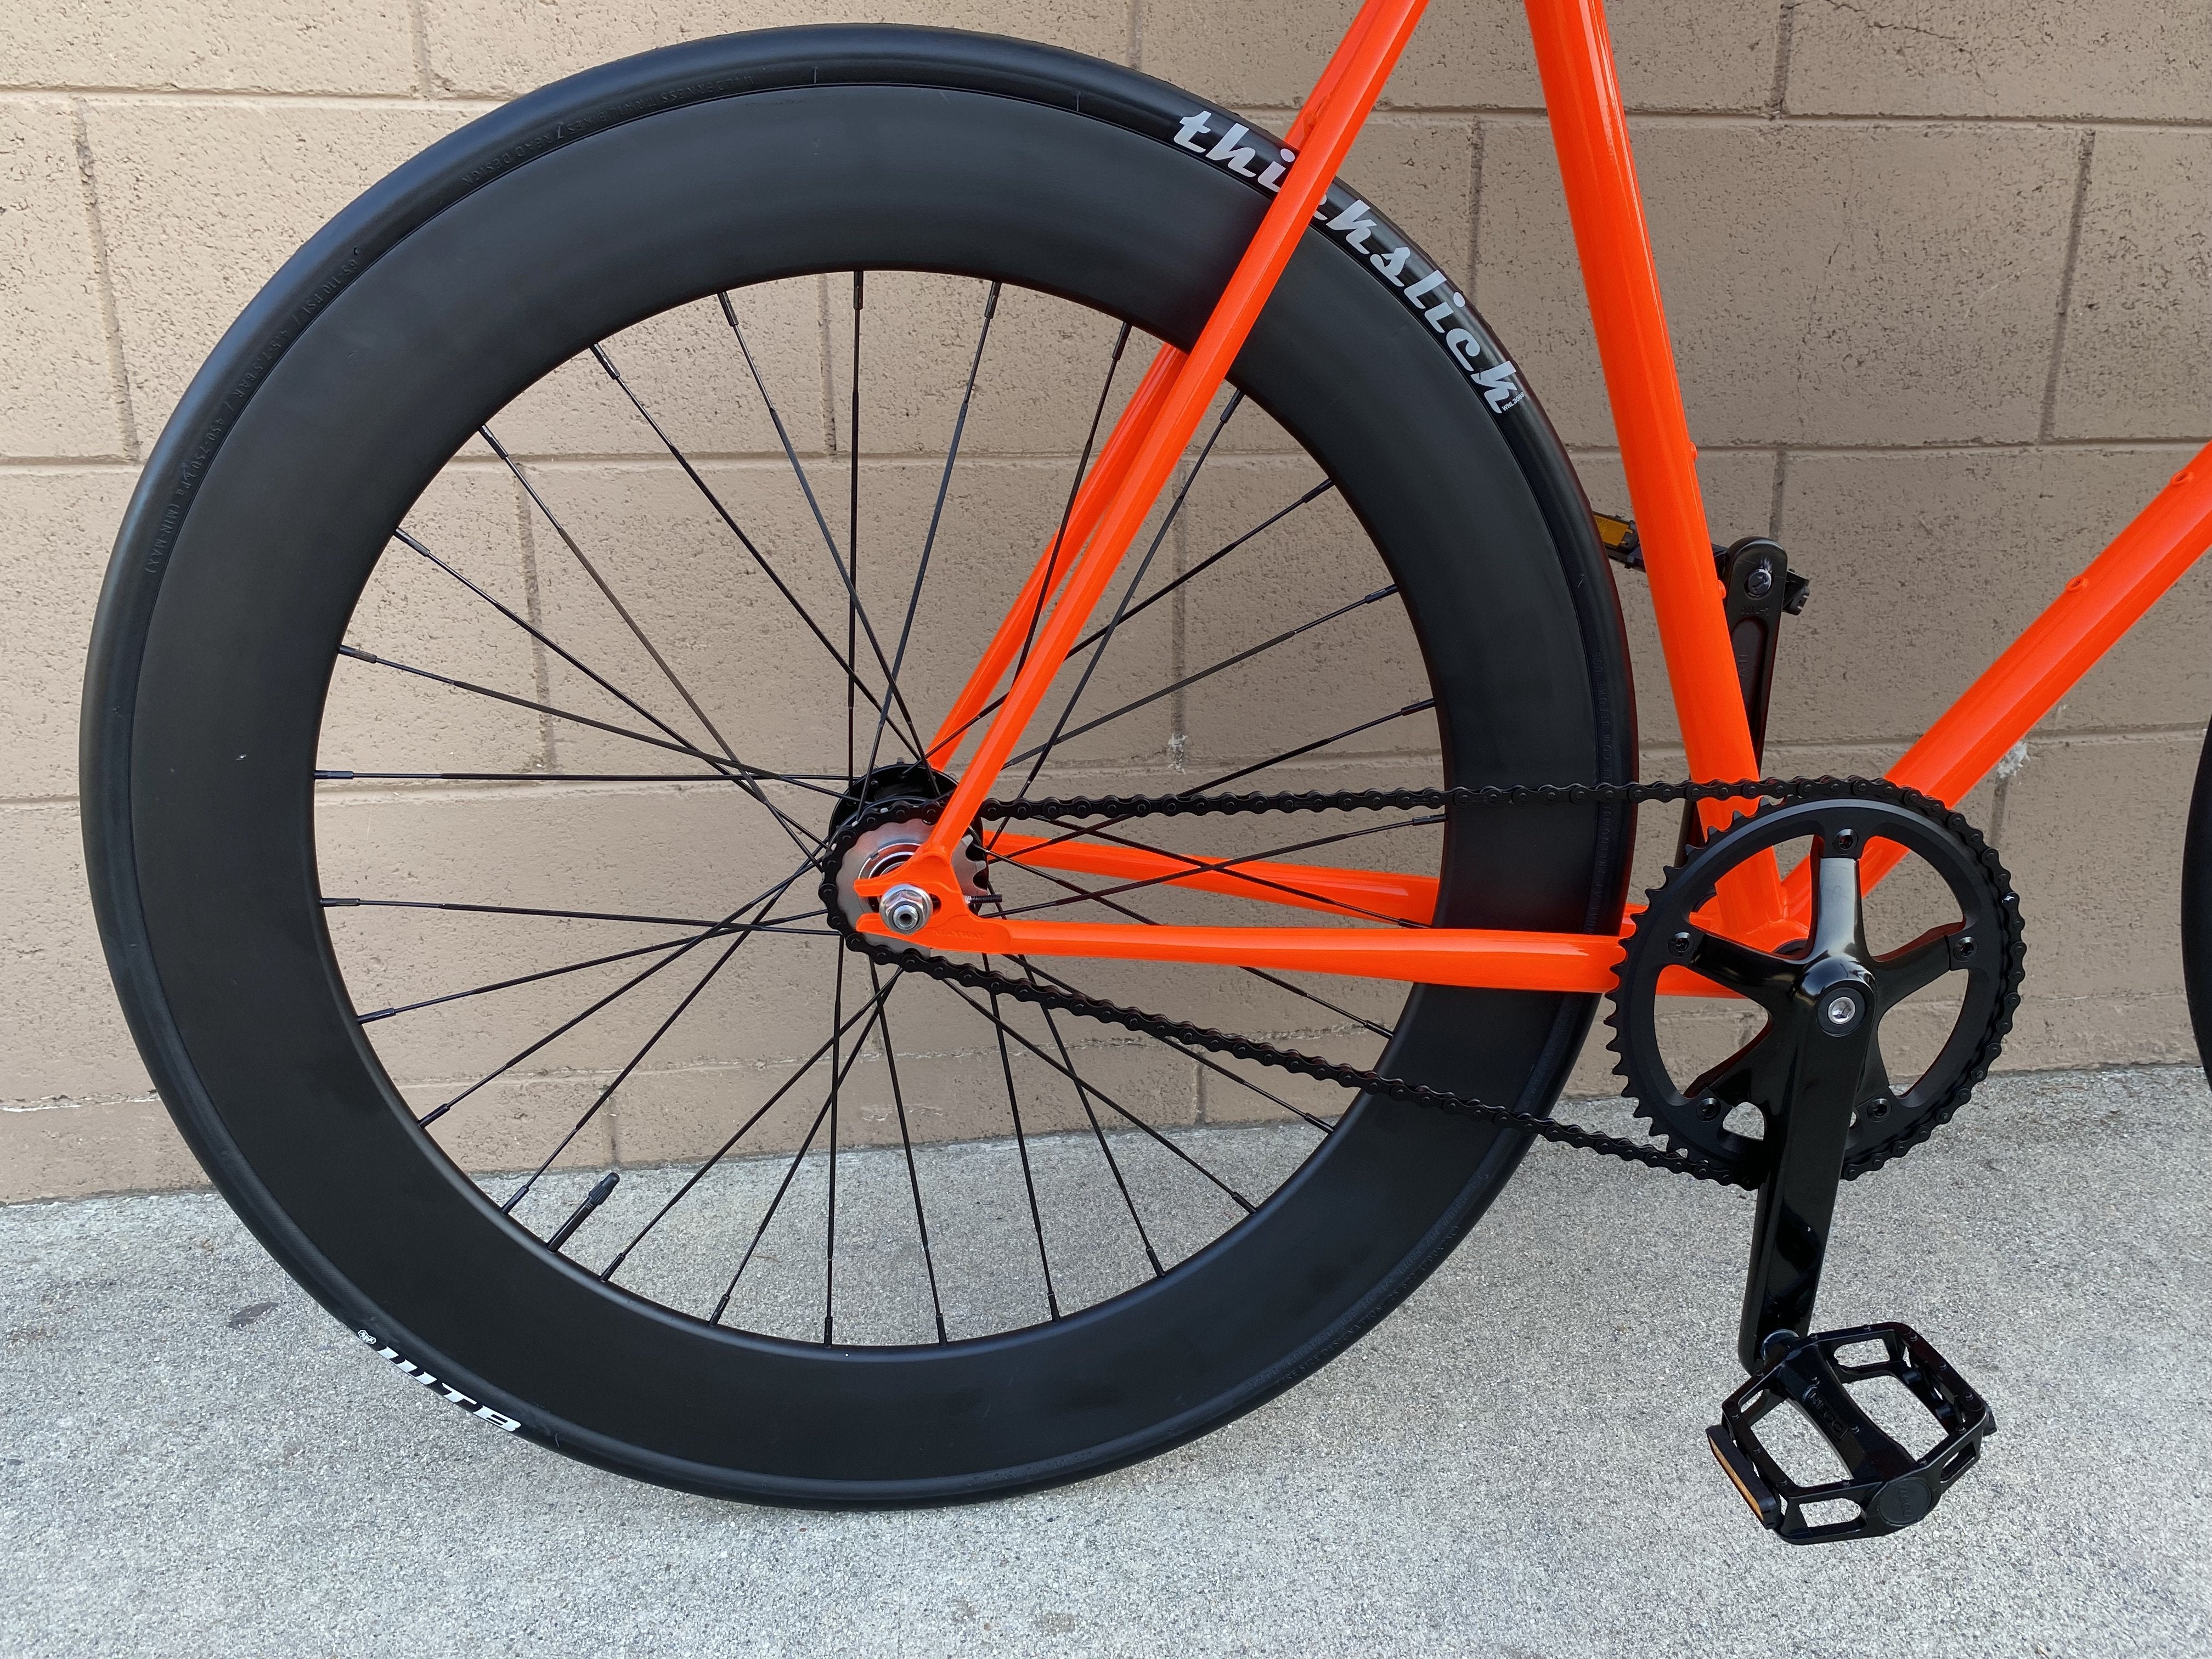 Sgvbicycles 4130 Chromoly Track Bike 55cm Orange